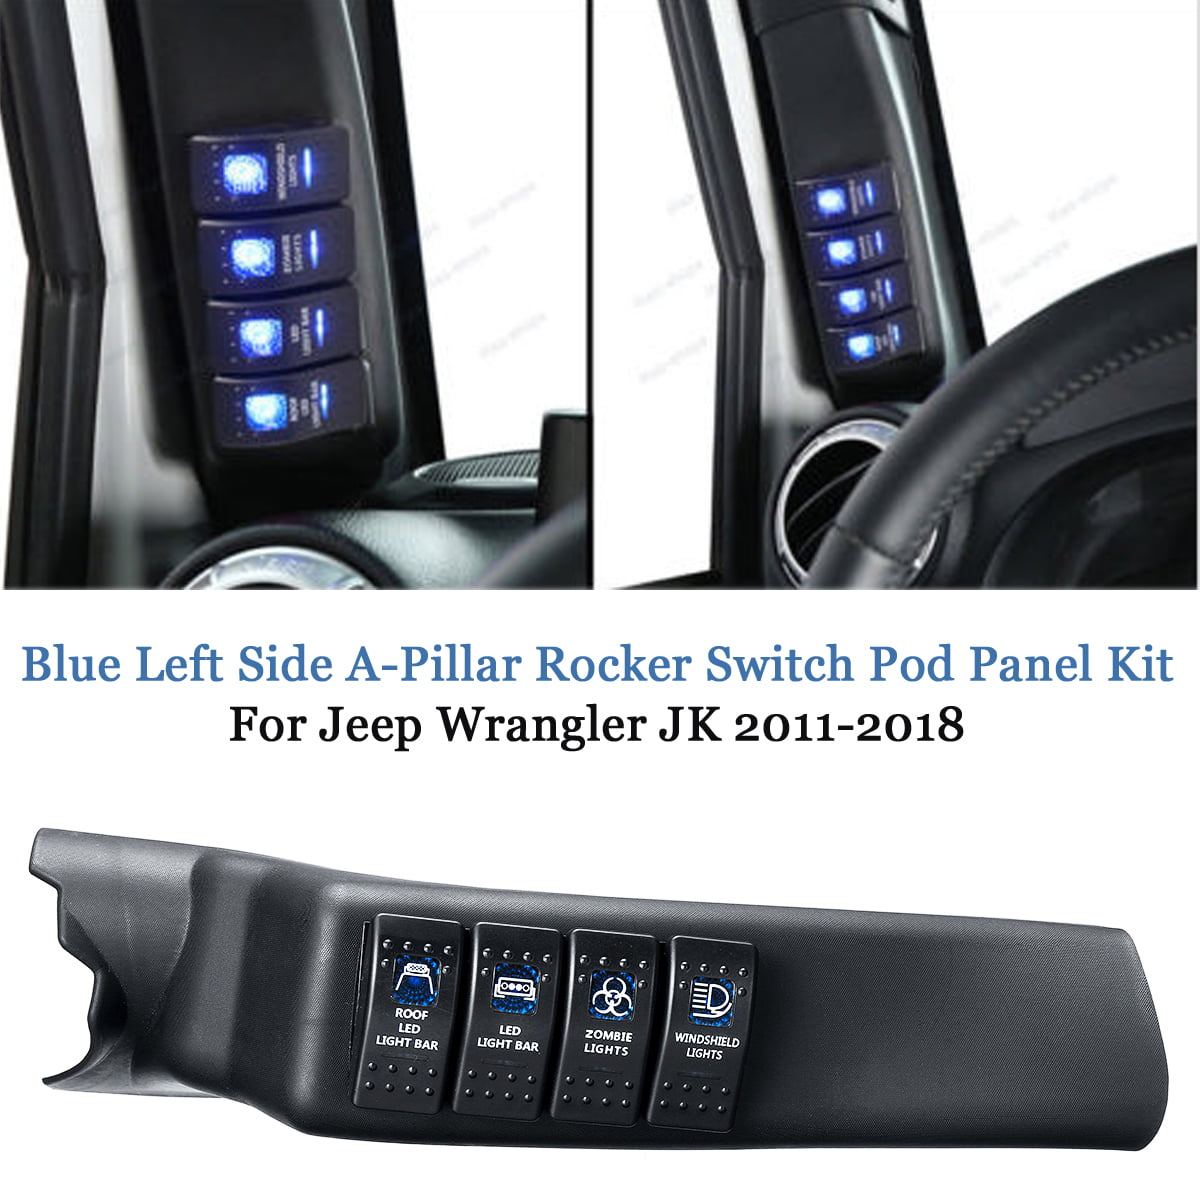 Car Blue Left Side A-Pillar Rocker Switch Pod Panel Kit For Jeep Wrangler JK  11-2018 | Walmart Canada